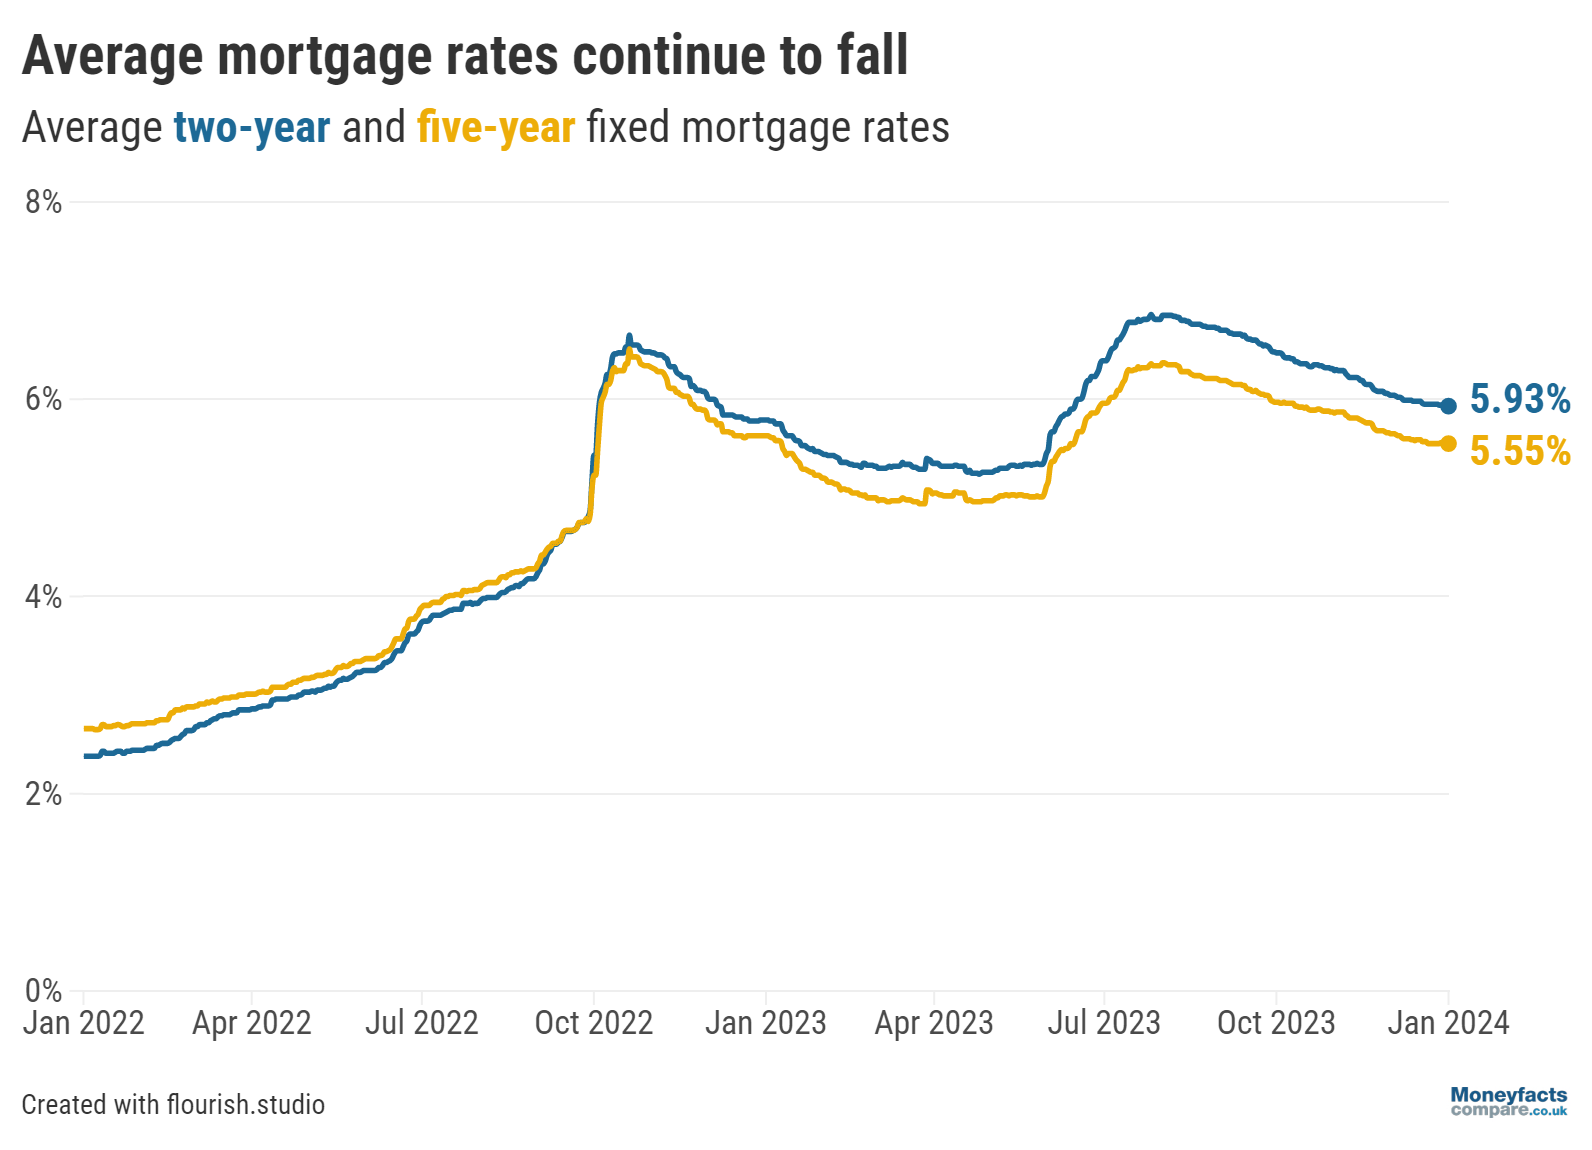 Graph showing average mortgage rates 2022 - Jan 2024